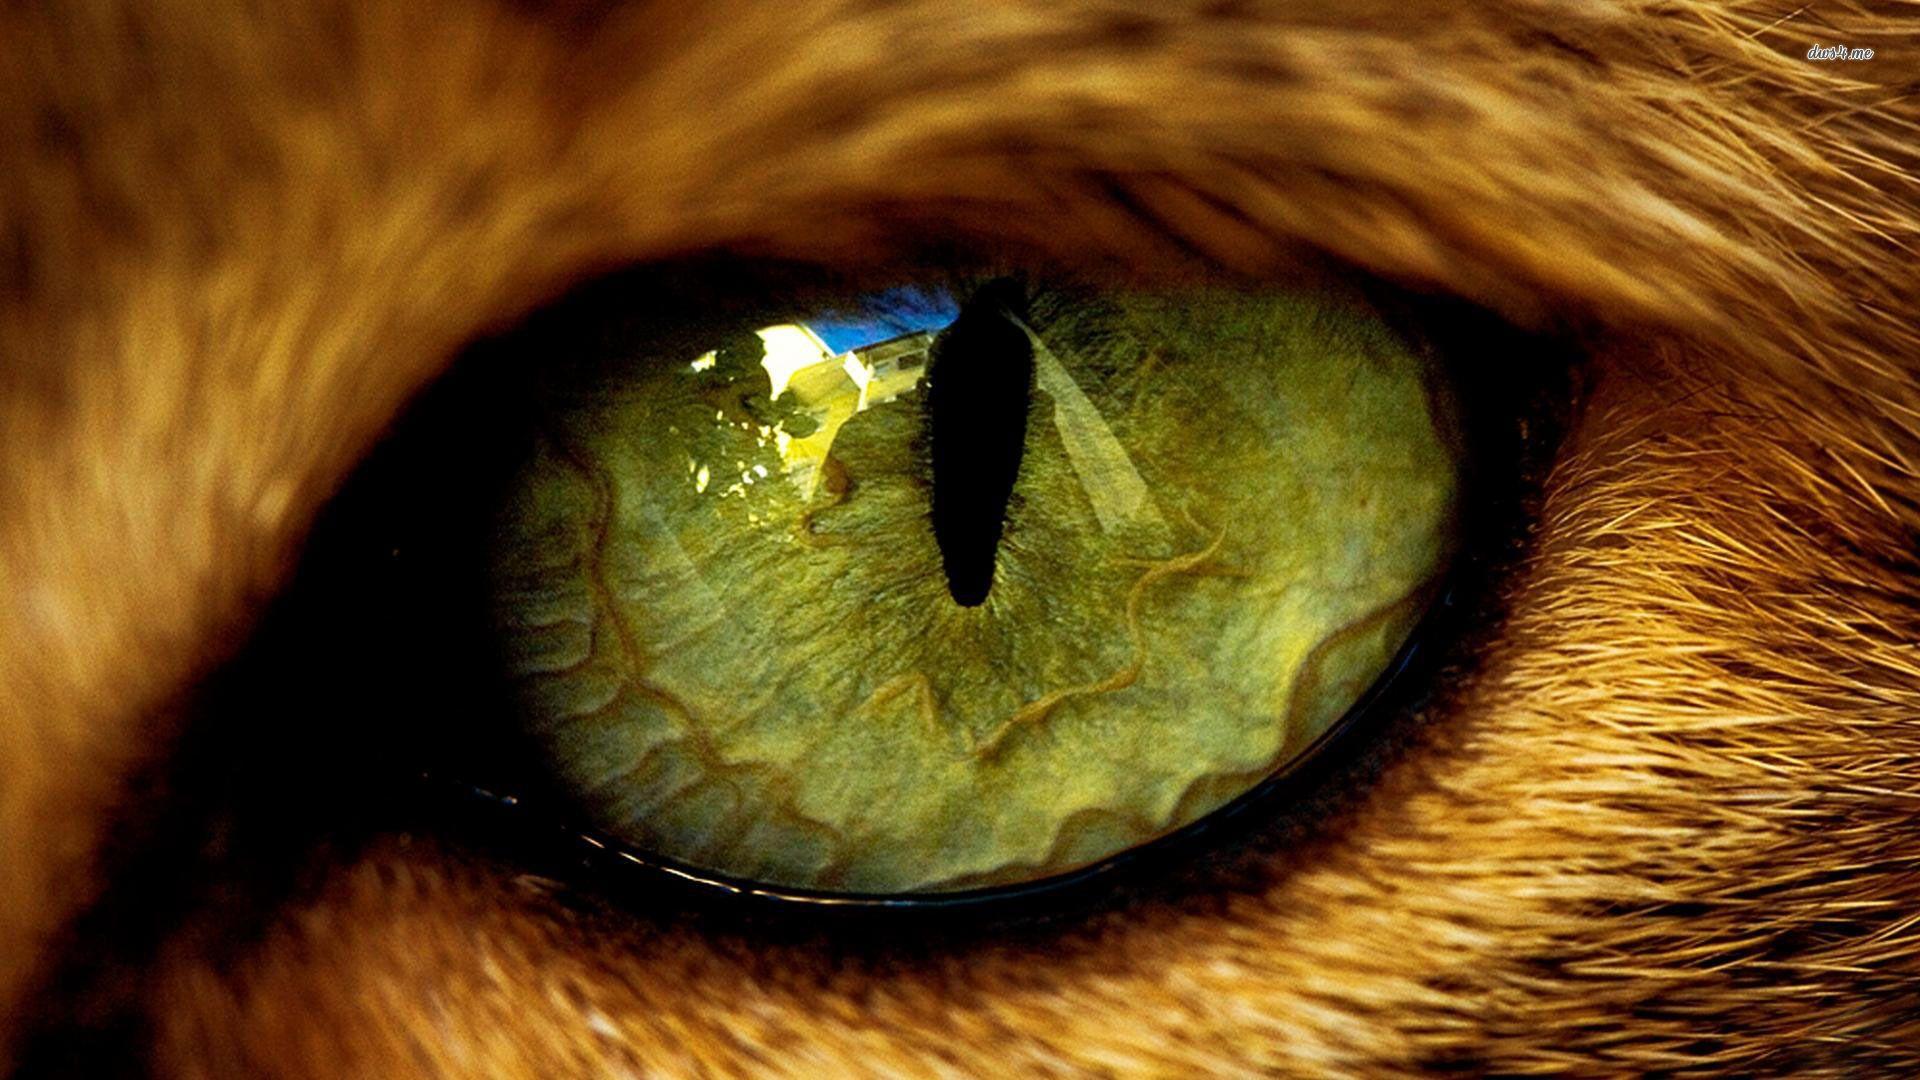 Animal Eyes Wallpaper HD image picture. Free Download